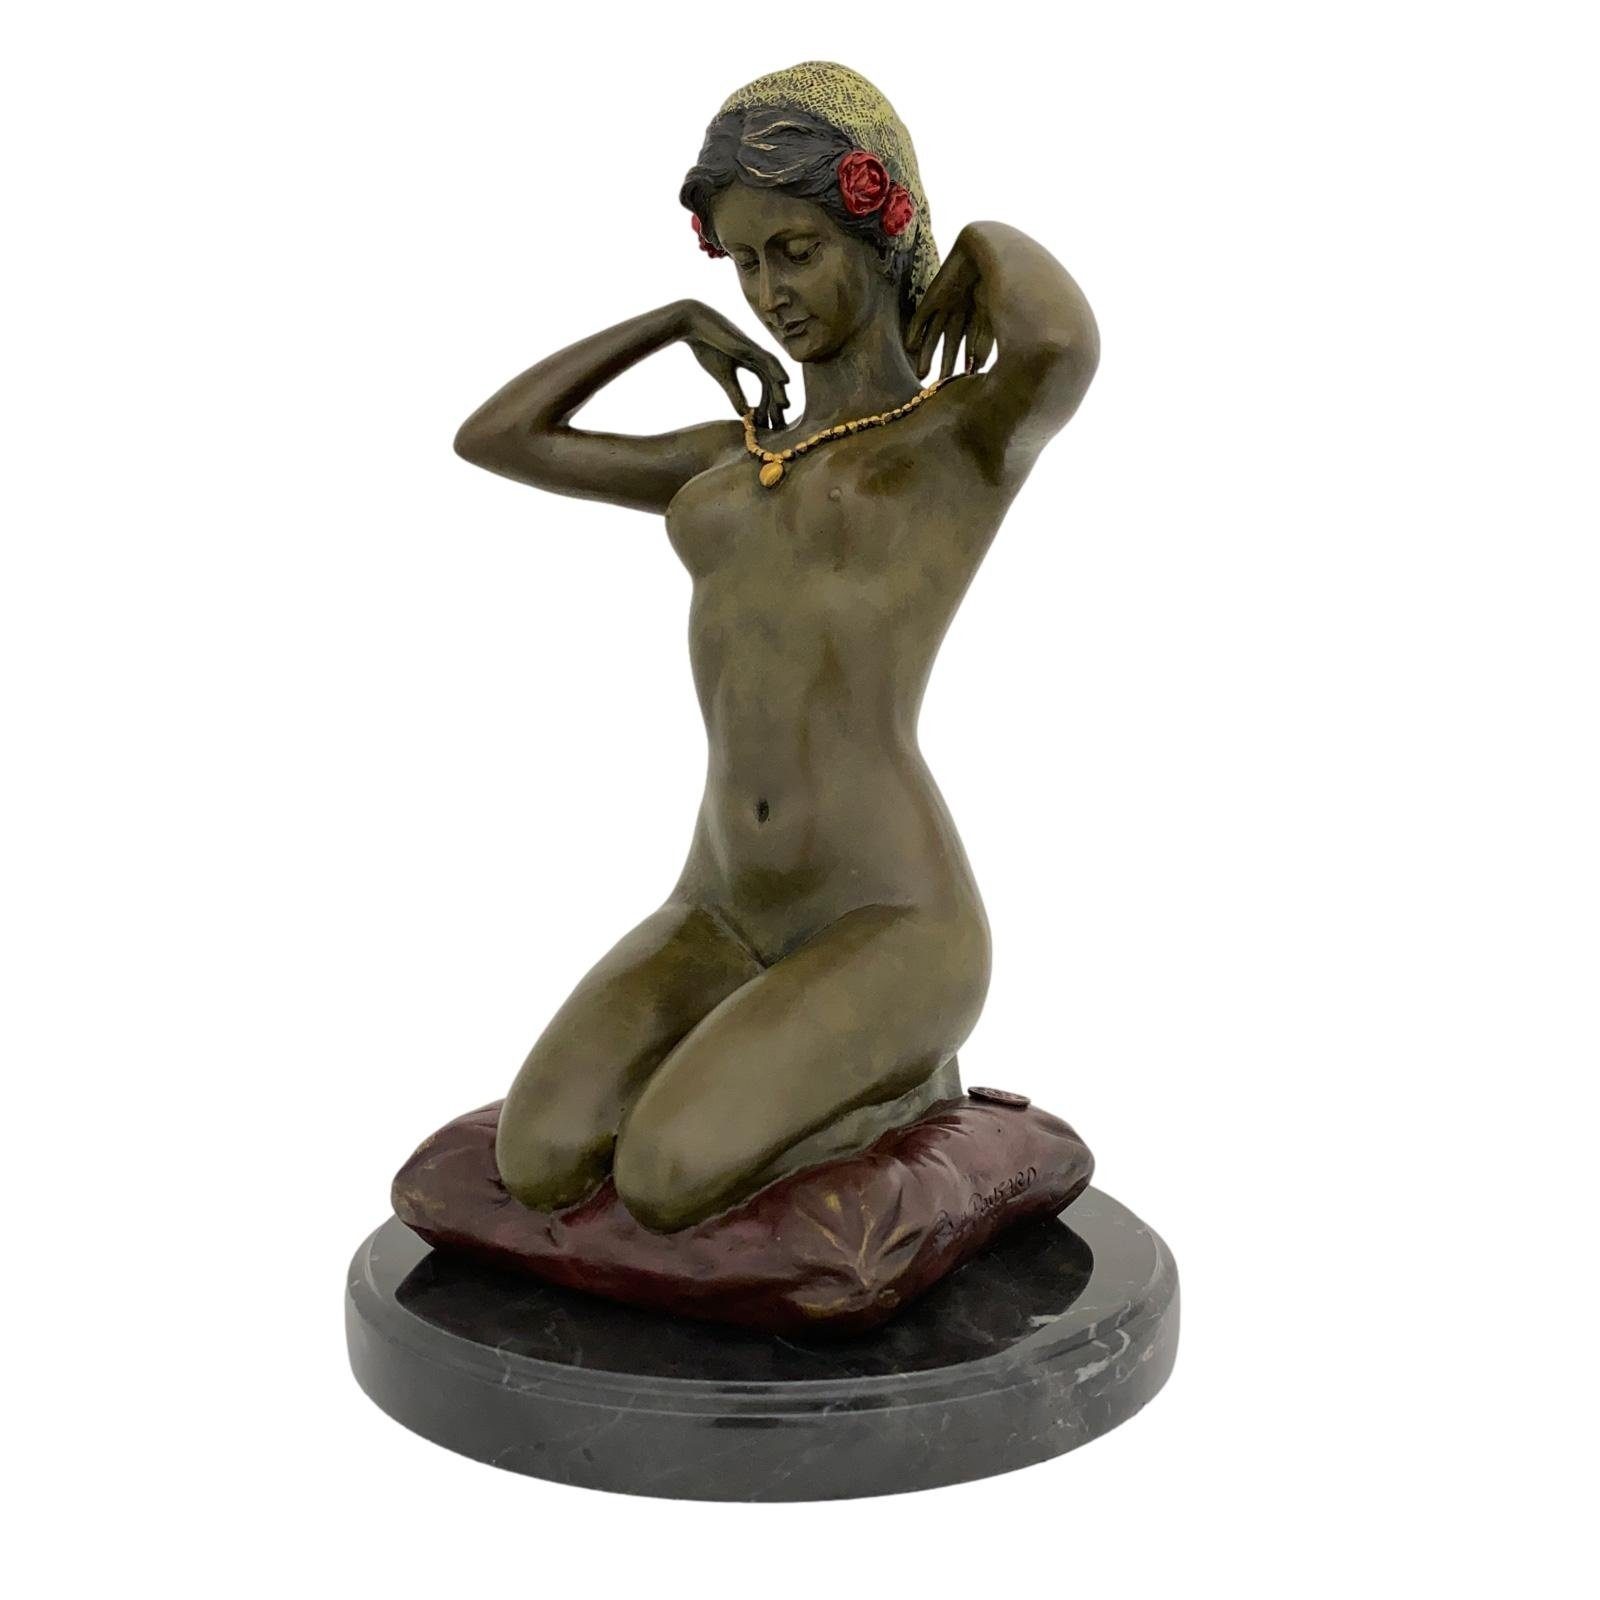 Aubaho Skulptur Bronzeskulptur Kunst Erotik nach Paul Ponsard Figur Antik-Stil 29cm Re